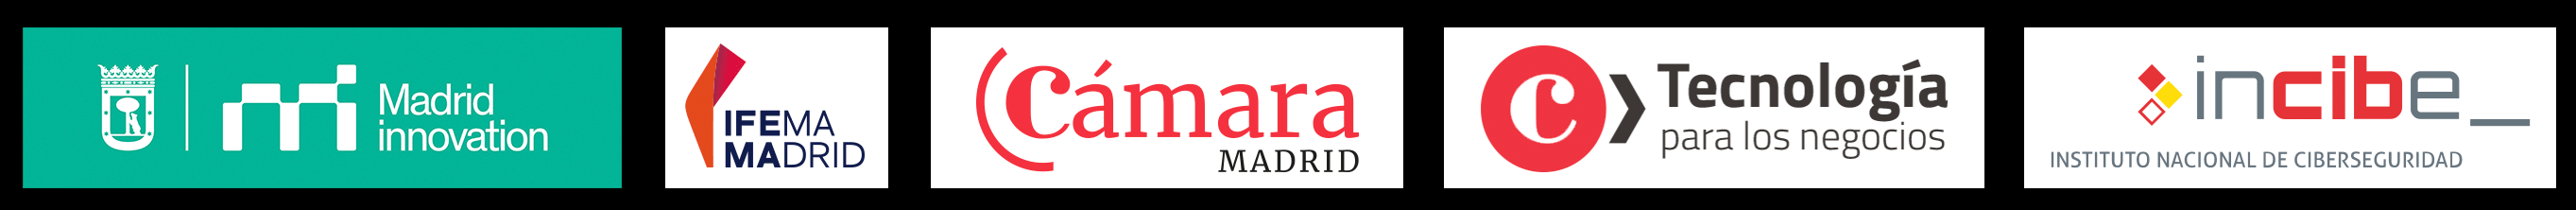 Madrid logos